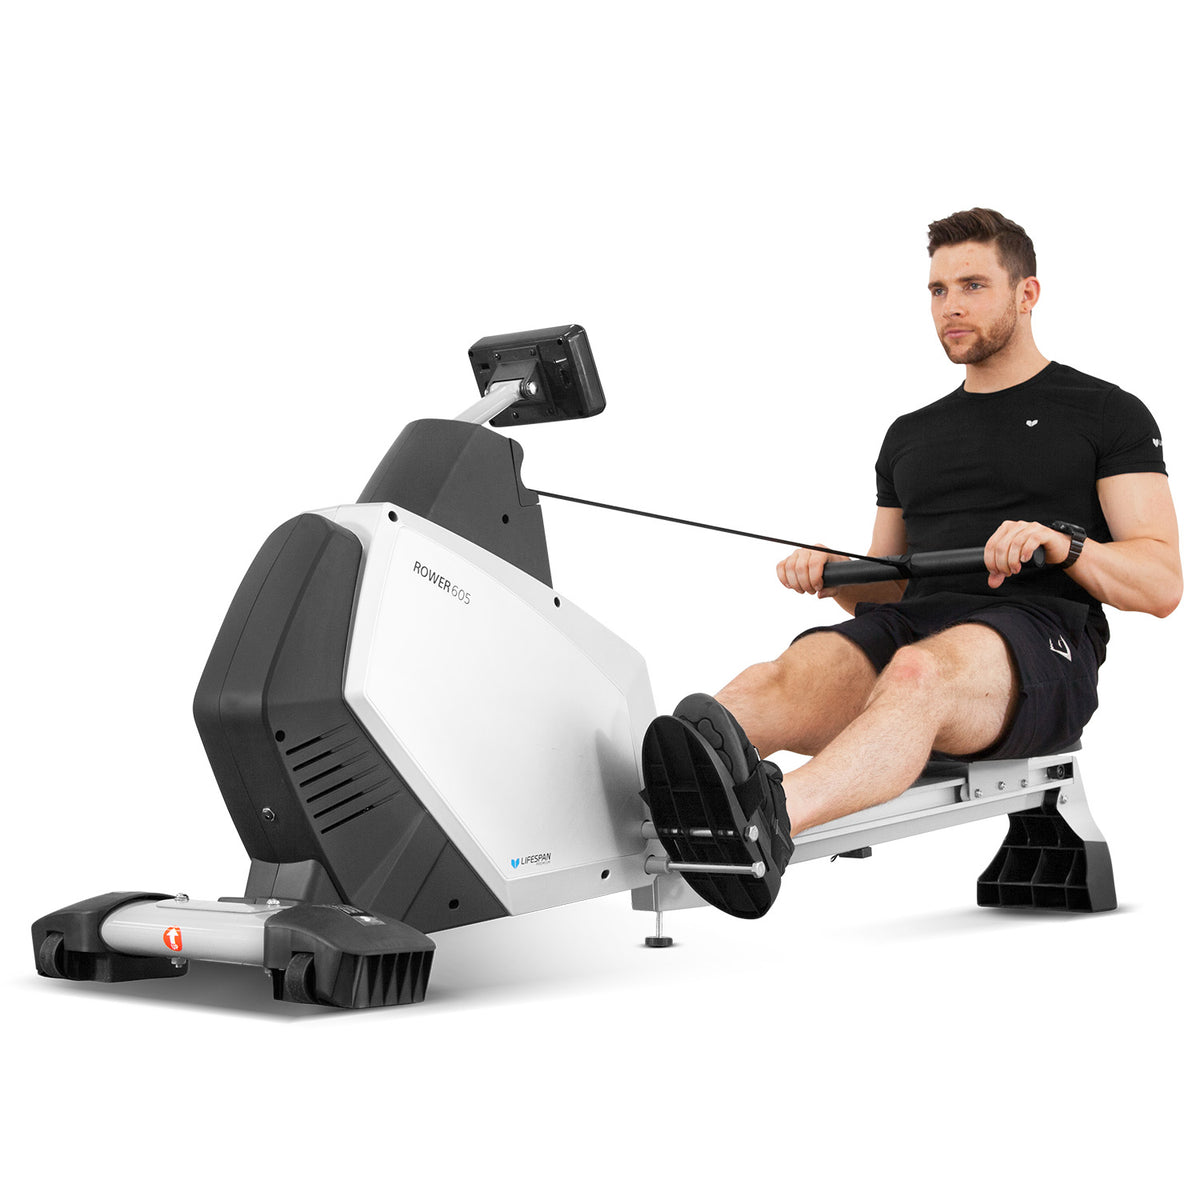 Lifespan Fitness ROWER-605 Resistance Rowing Machine